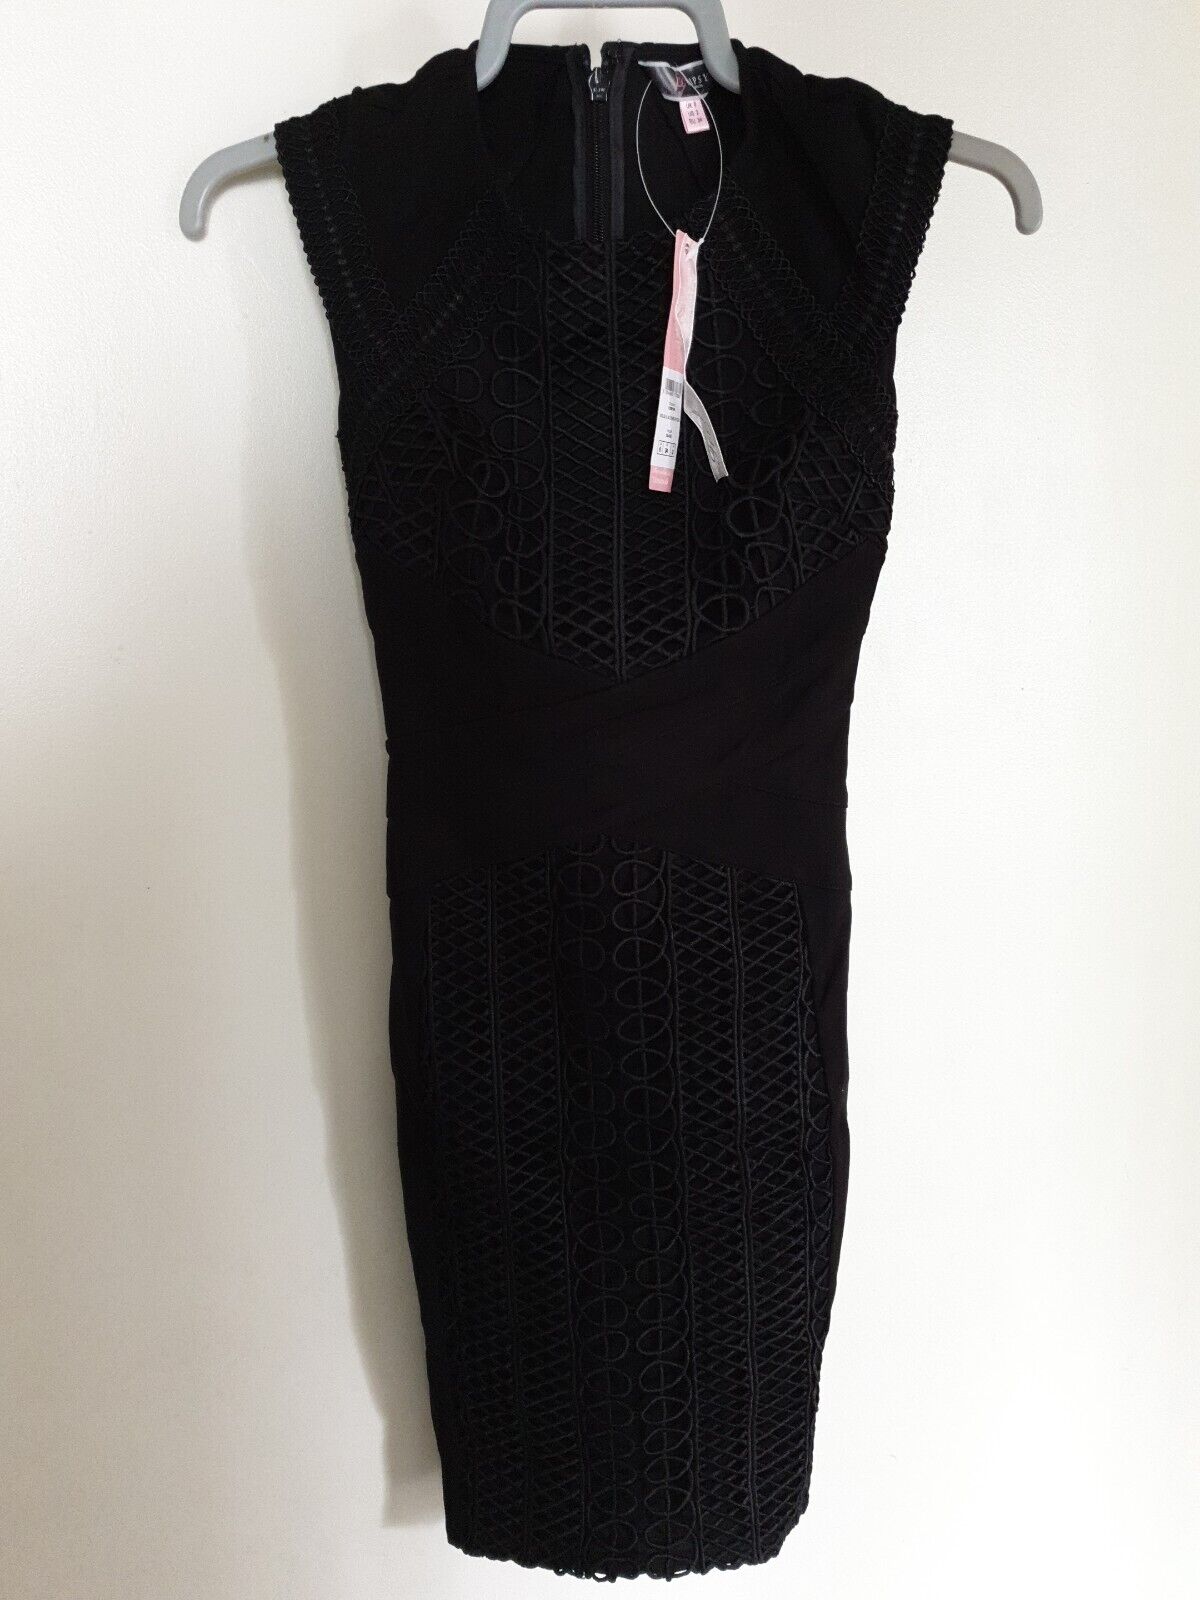 Lipsy Black Embroidered Bodycon Dress Uk6 Ref Lb8